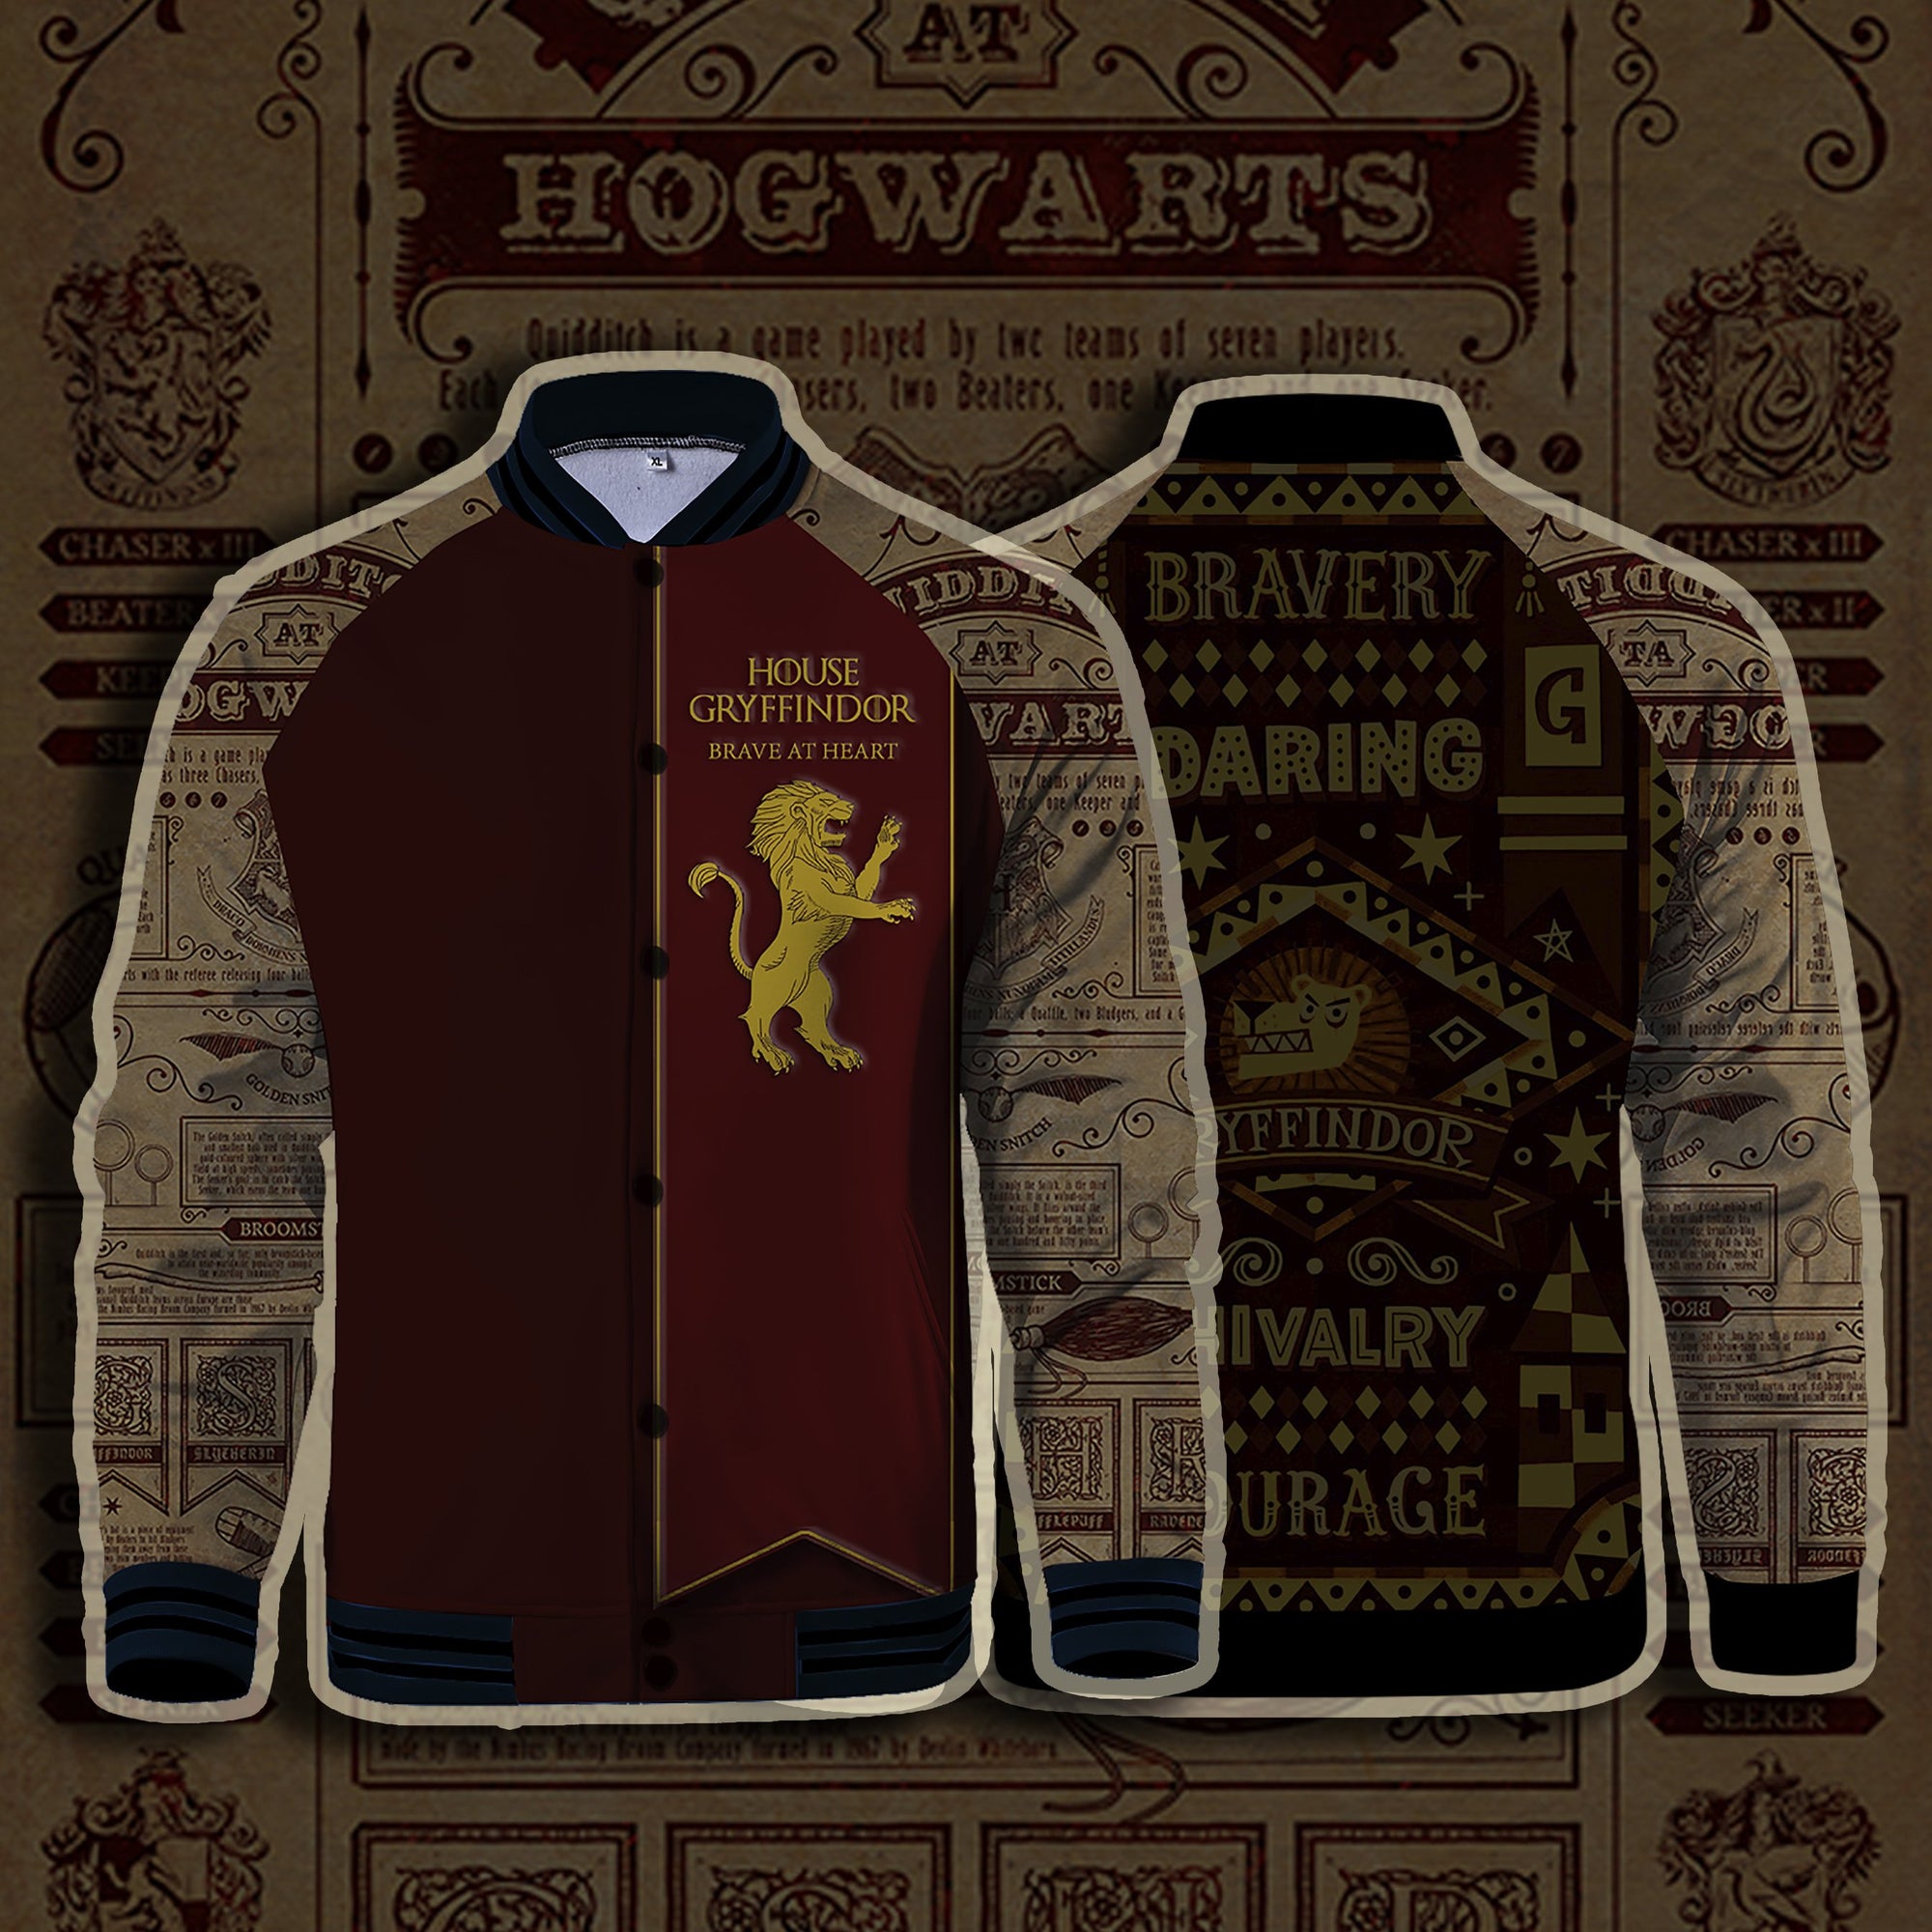 House Gryffindor Brave At Heart Harry Potter Baseball Jacket US/EU XXS (ASIAN S)  